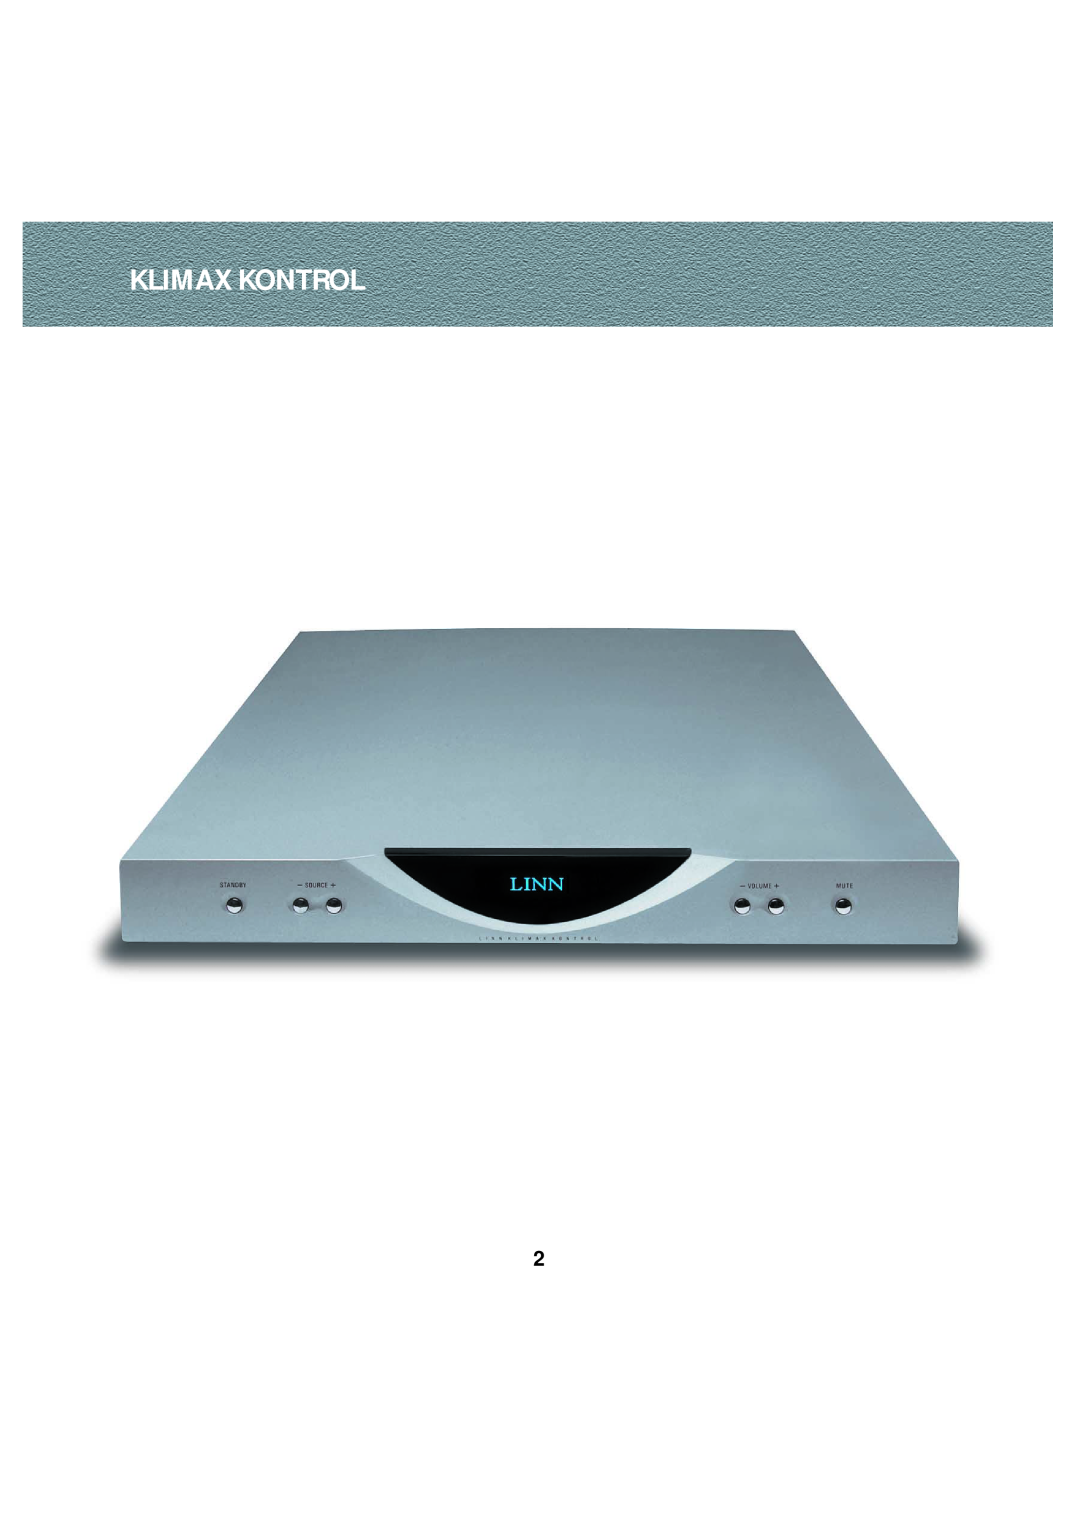 Linn Stereo Pre-Amplifier owner manual Klimax Kontrol 